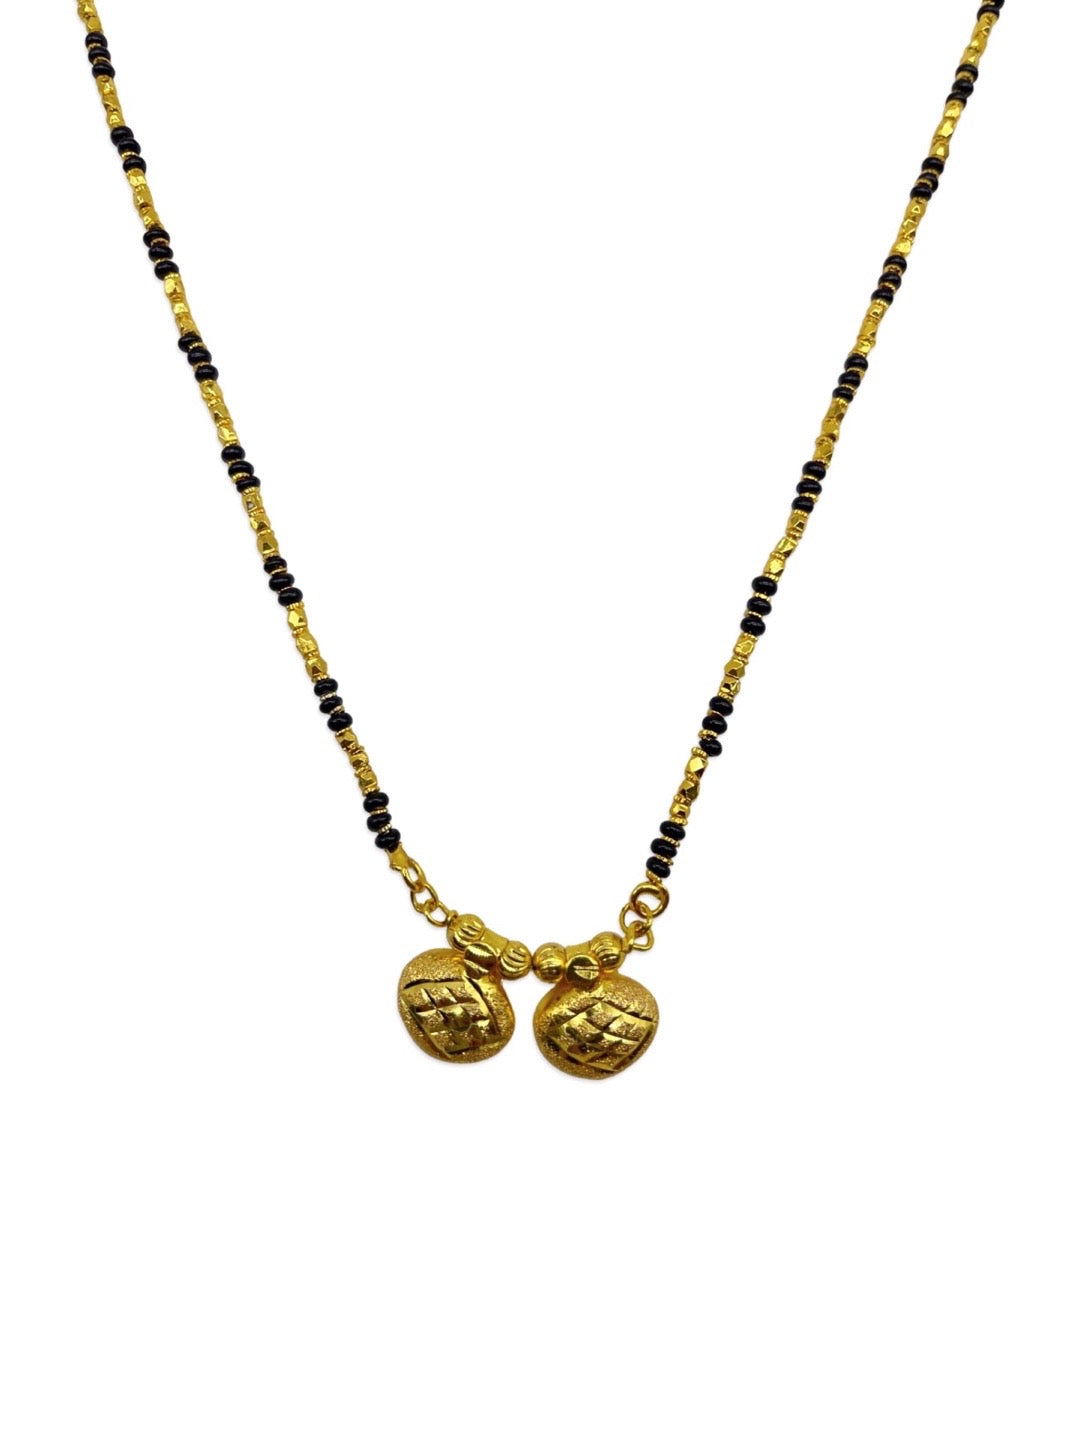 black beads chain